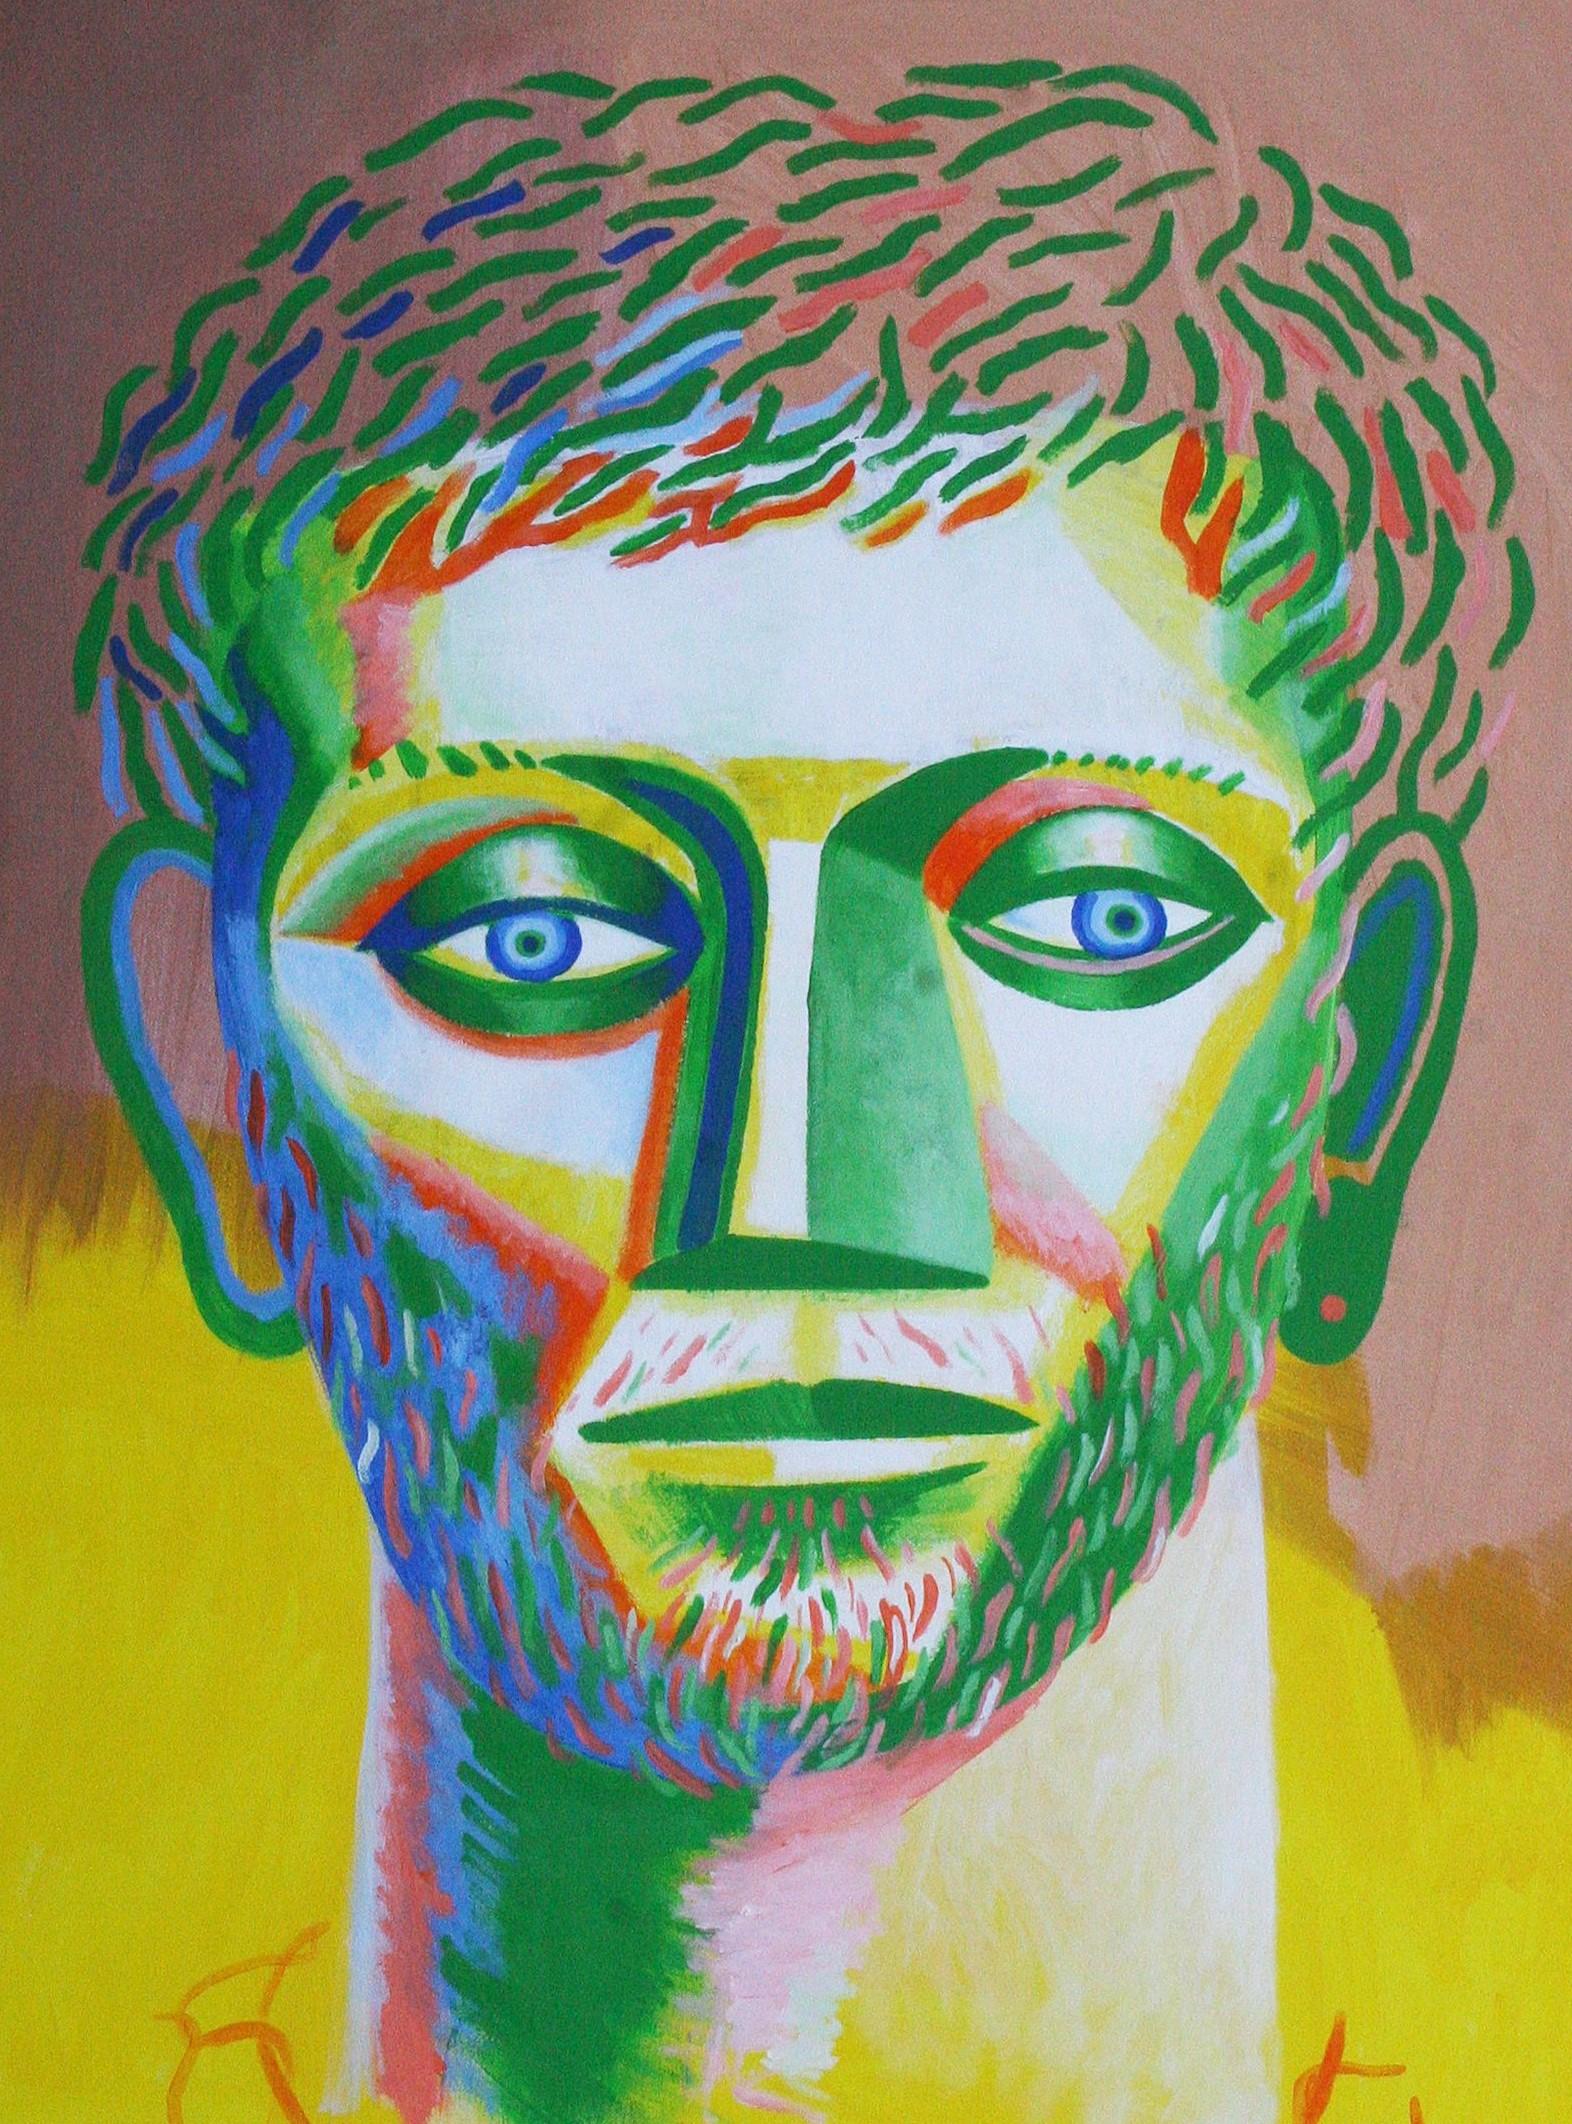 Untitled - Contemporary Art, Yellow, Green, Human Portrait, Male, 21st Century - Painting by Alexandru Rădvan